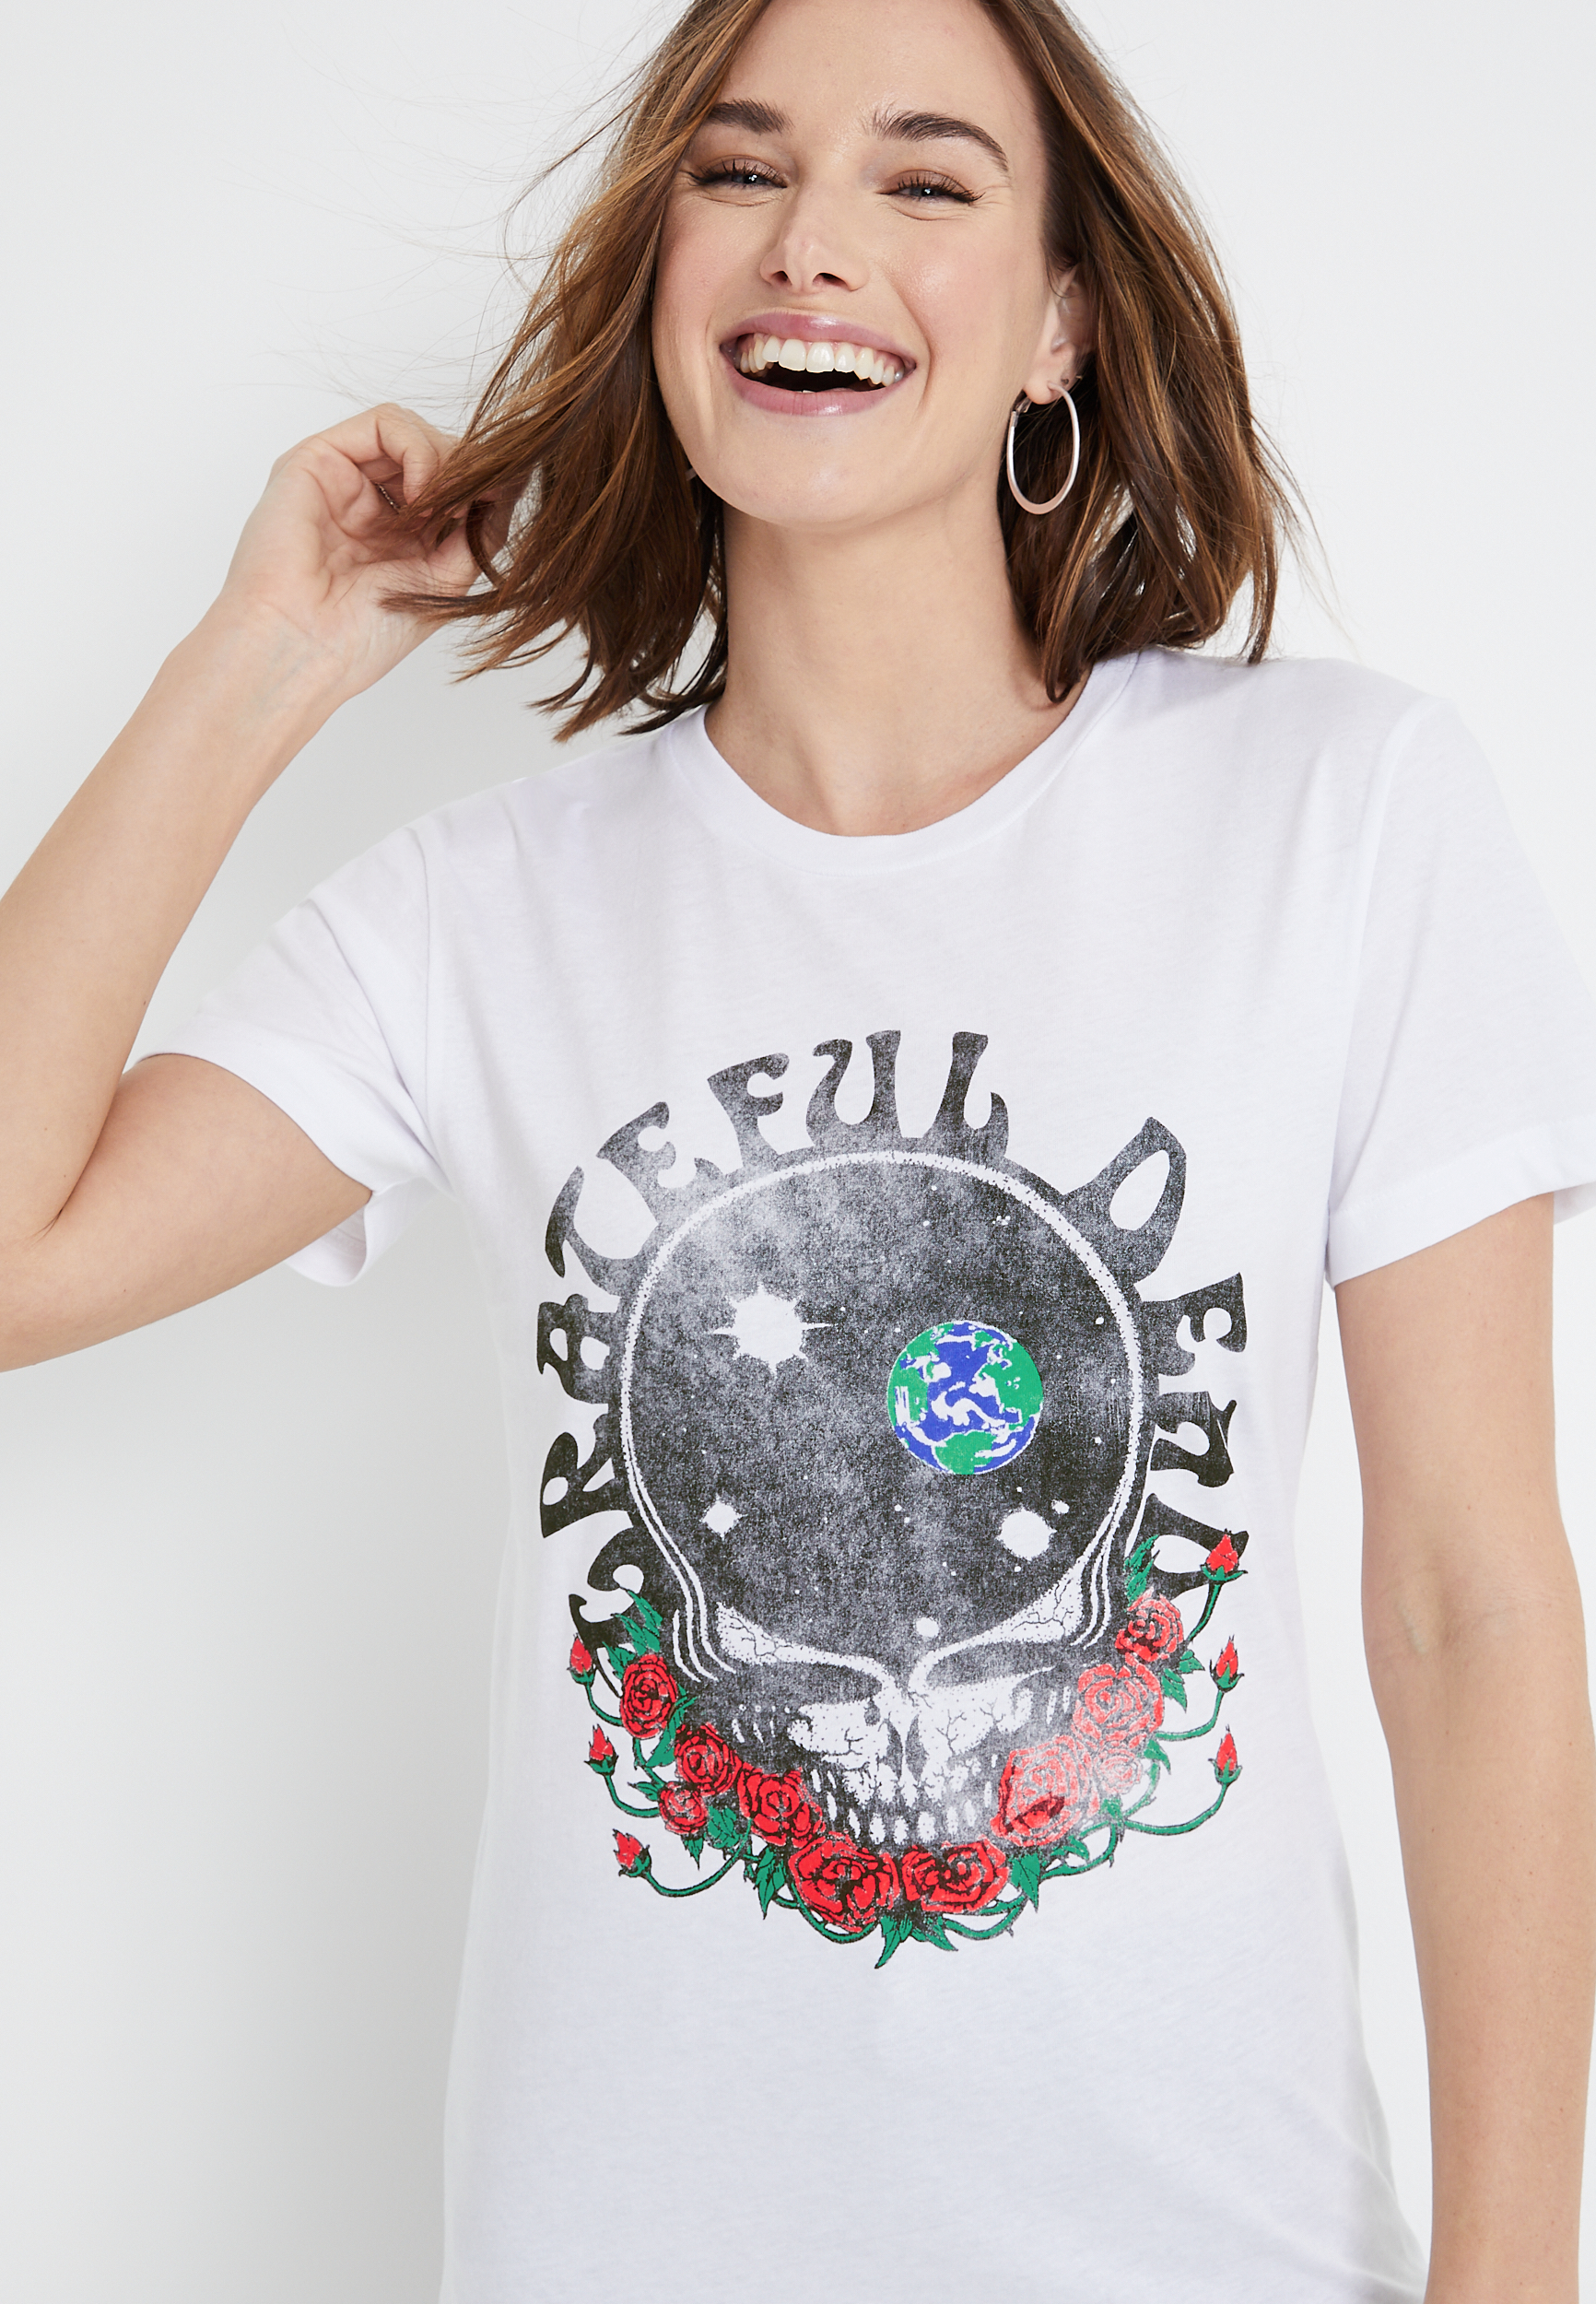 The Grateful Dead Graphic T-Shirt - White